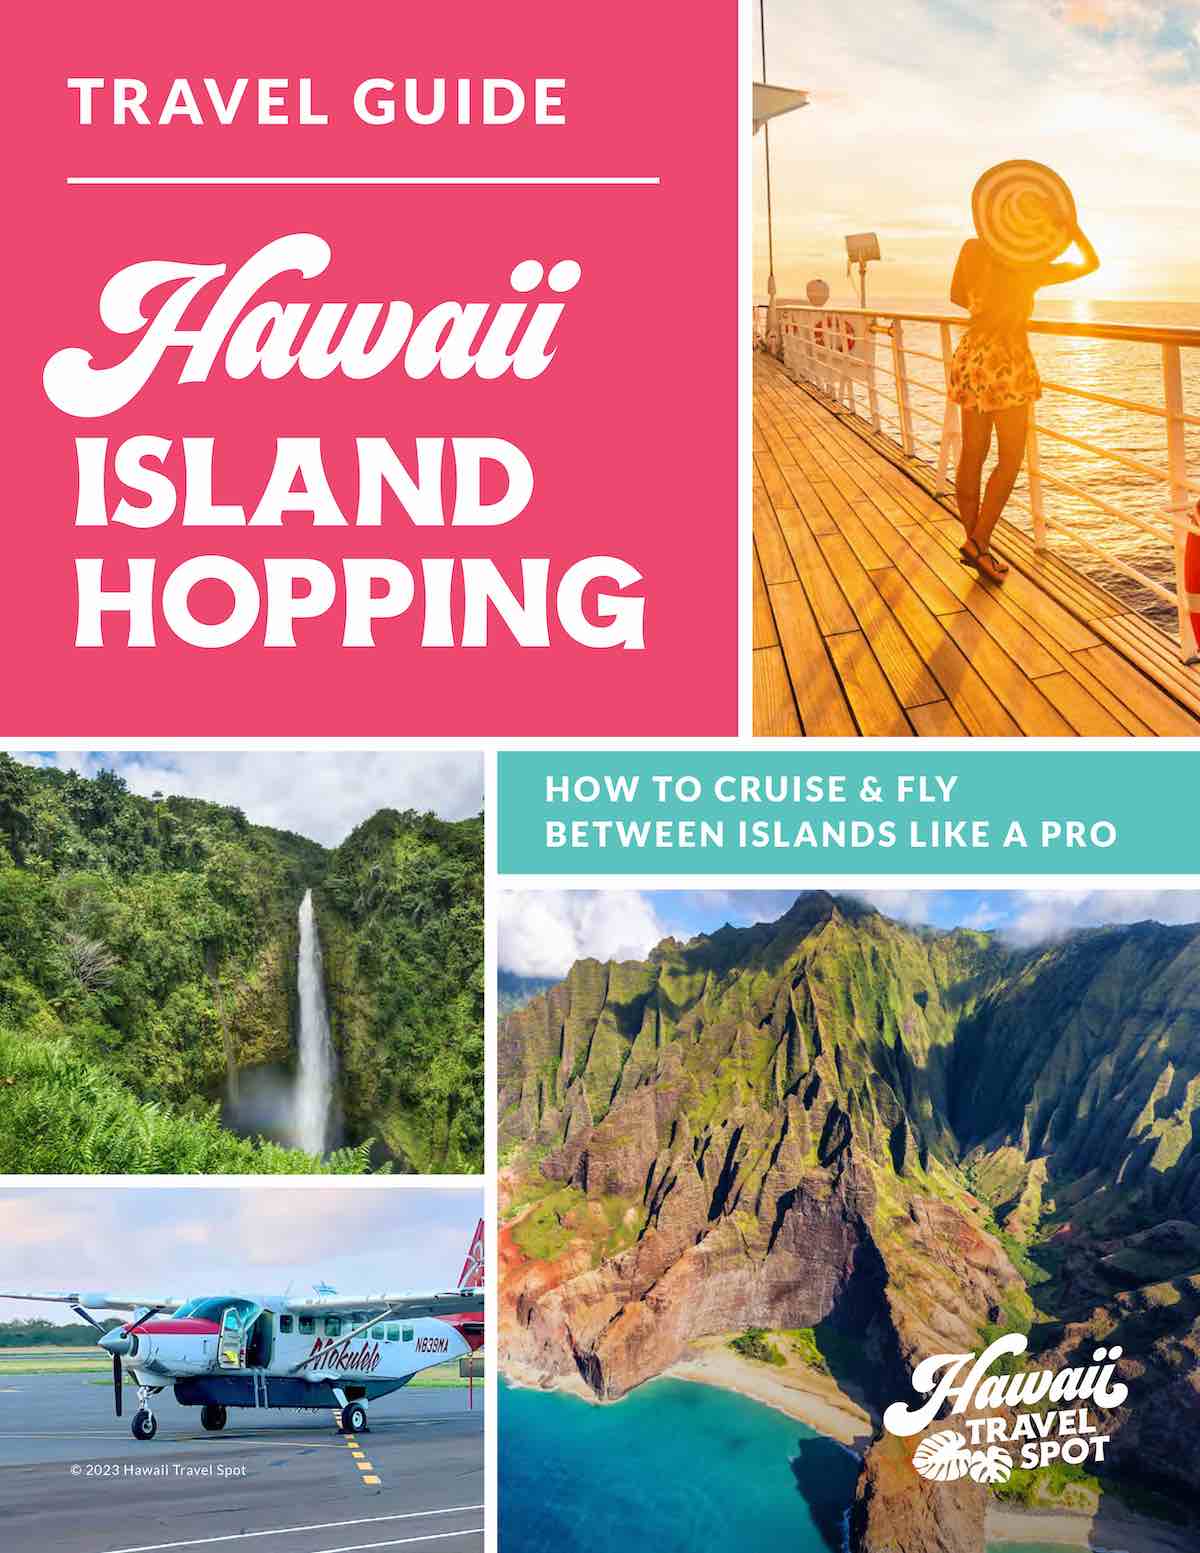 Check out this Hawaii Island Hopping guide featuring Hawaii itineraries for Oahu, Maui, Kauai, Big Island, Lana'i, and Moloka'i by top Hawaii blog Hawaii Travel Spot!